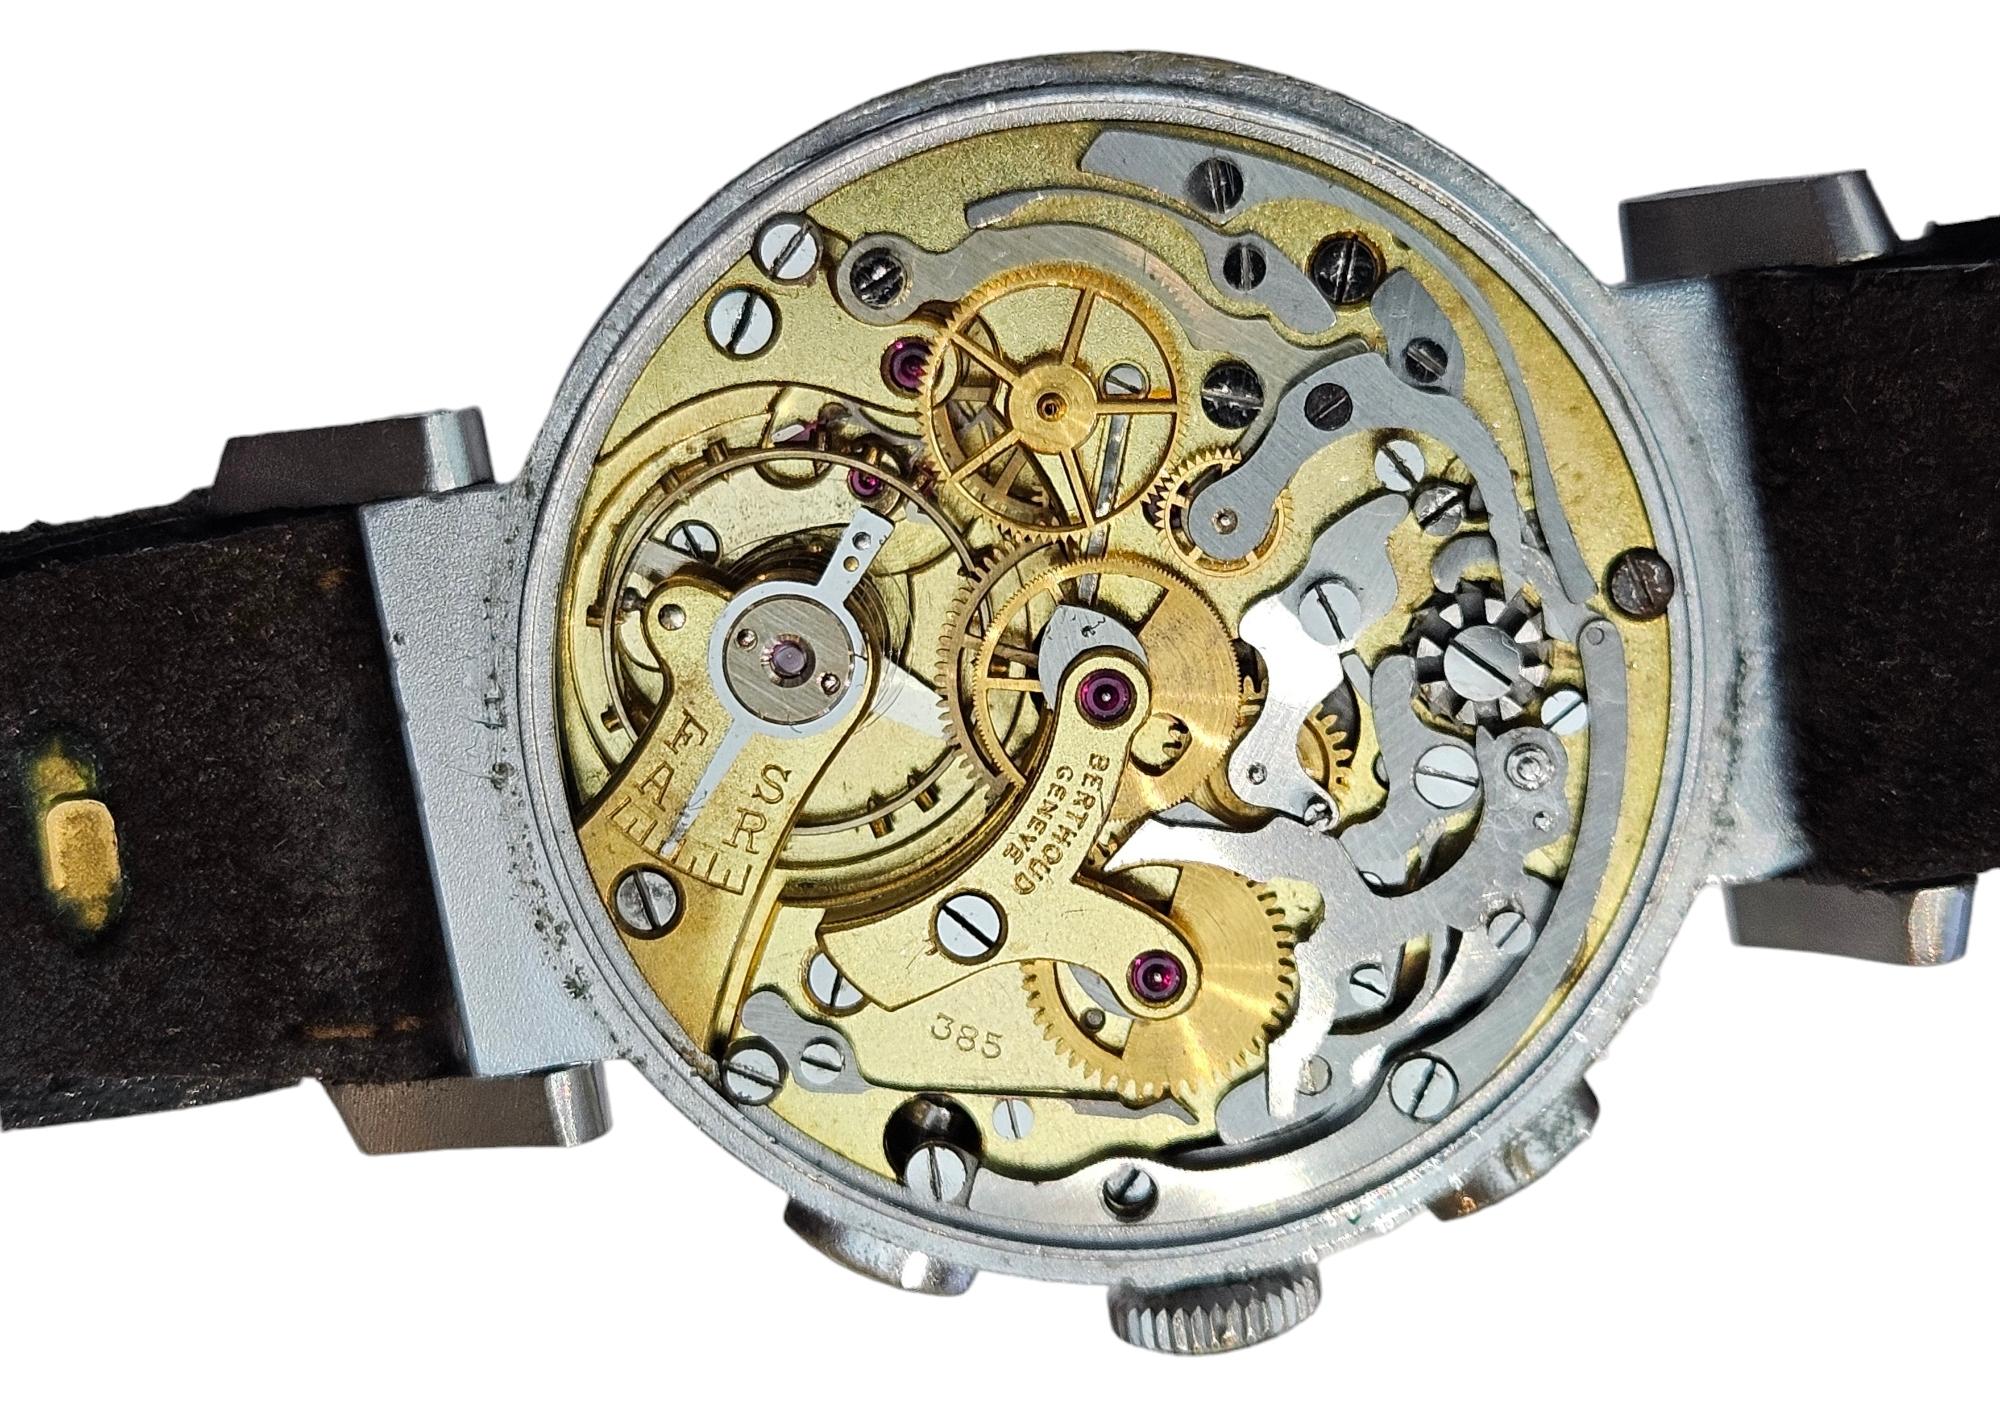 Berthoud / Universal Genève Uni Compax Chronograph Wrist Watch, Rare Collectors For Sale 7